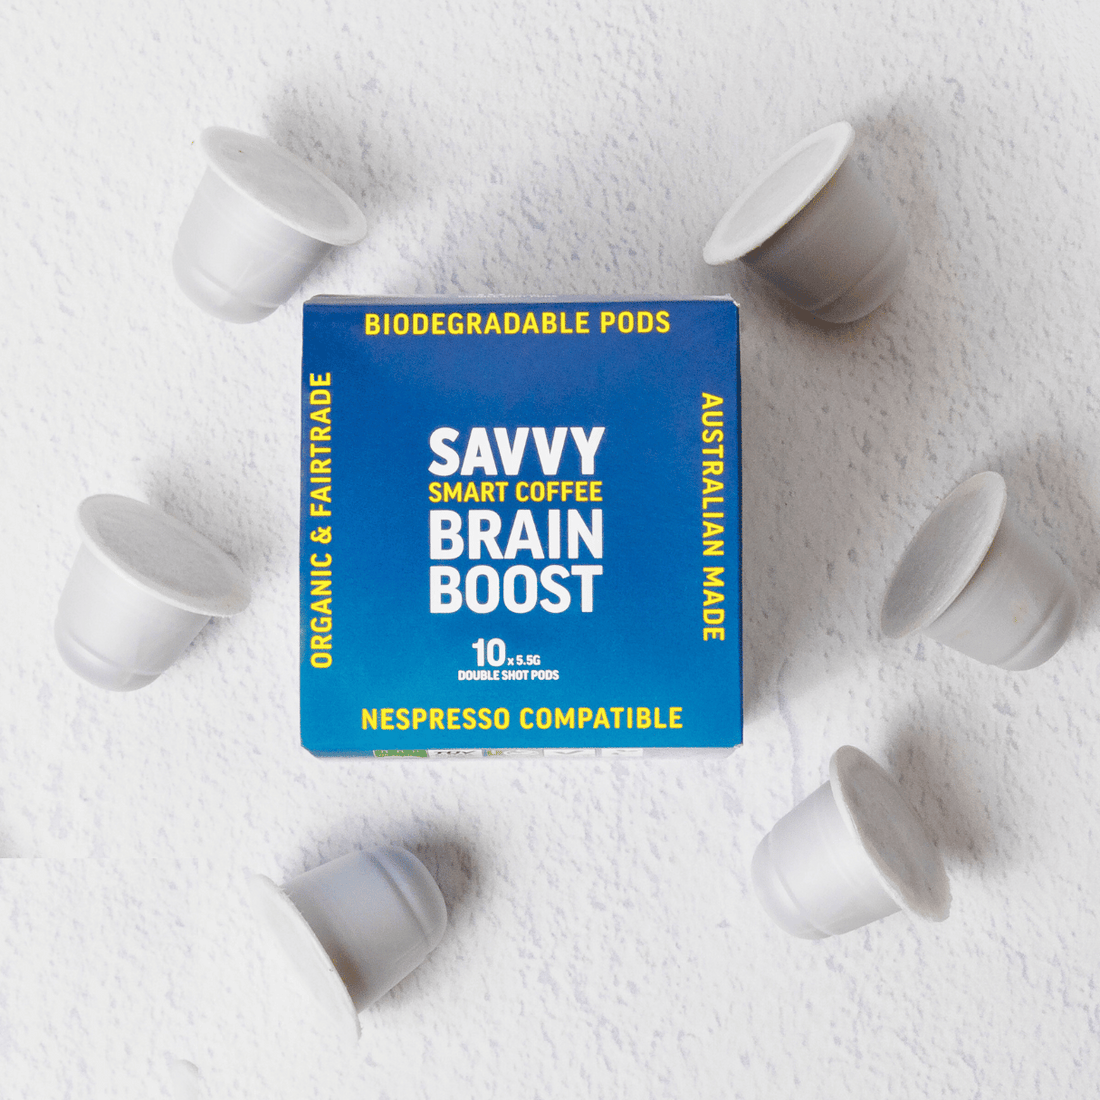 Savvy Smart Coffee Brain Boost Double Shot Pods